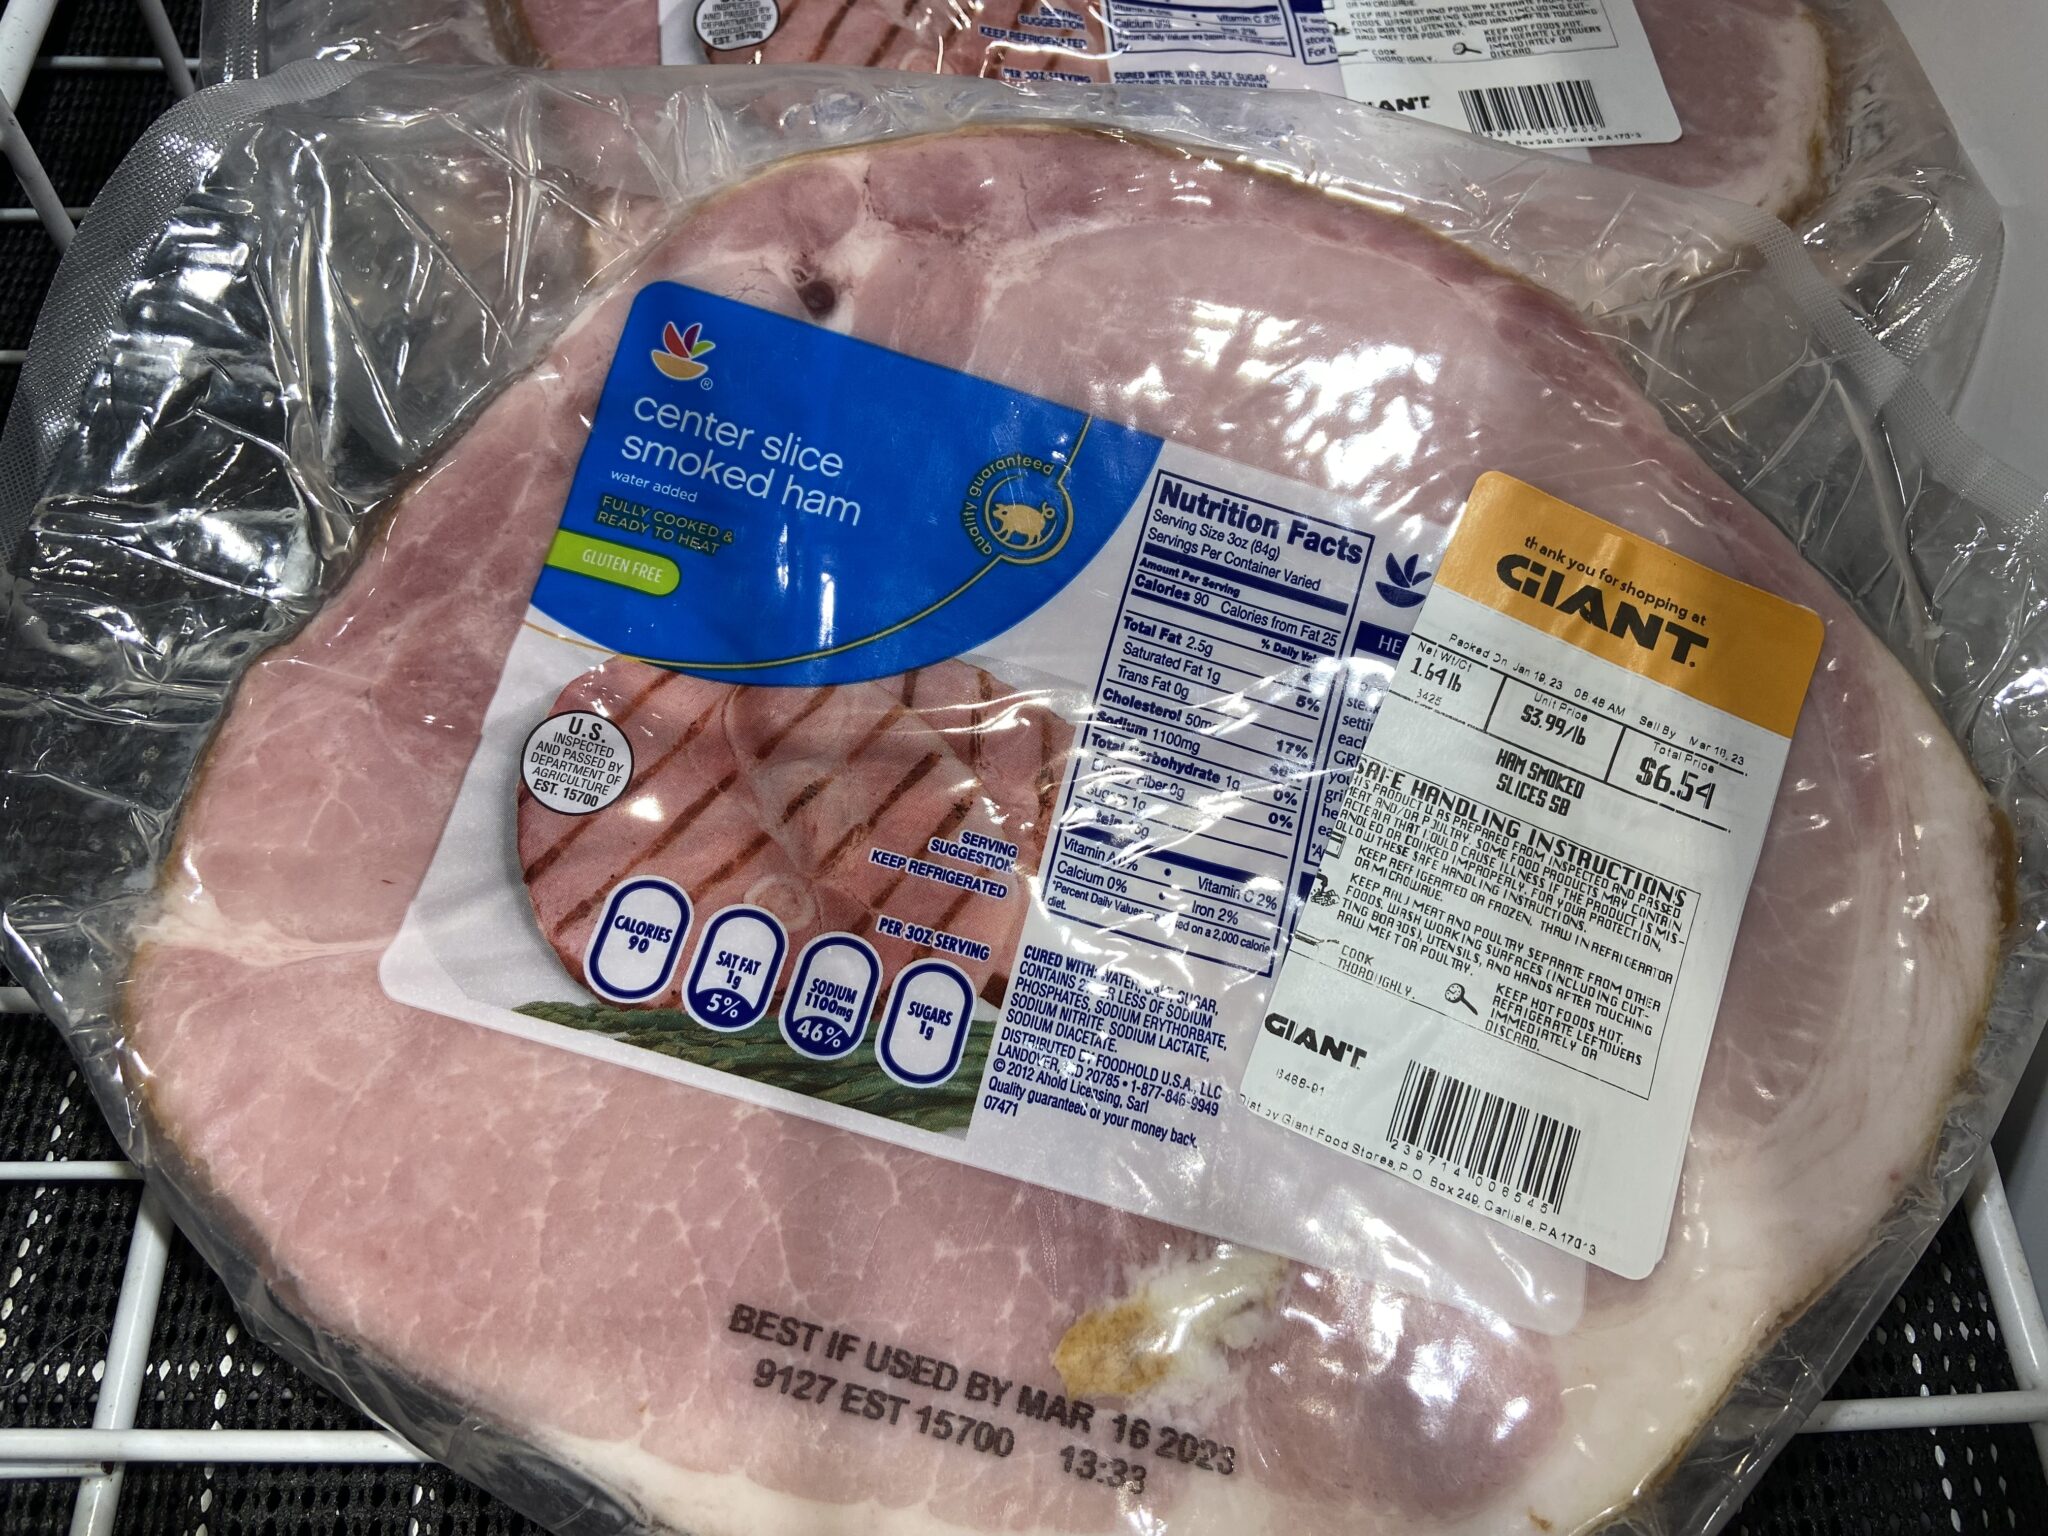 Digital Coupon Offer On Giant Brand Smoked Ham Steak Thru 6/22